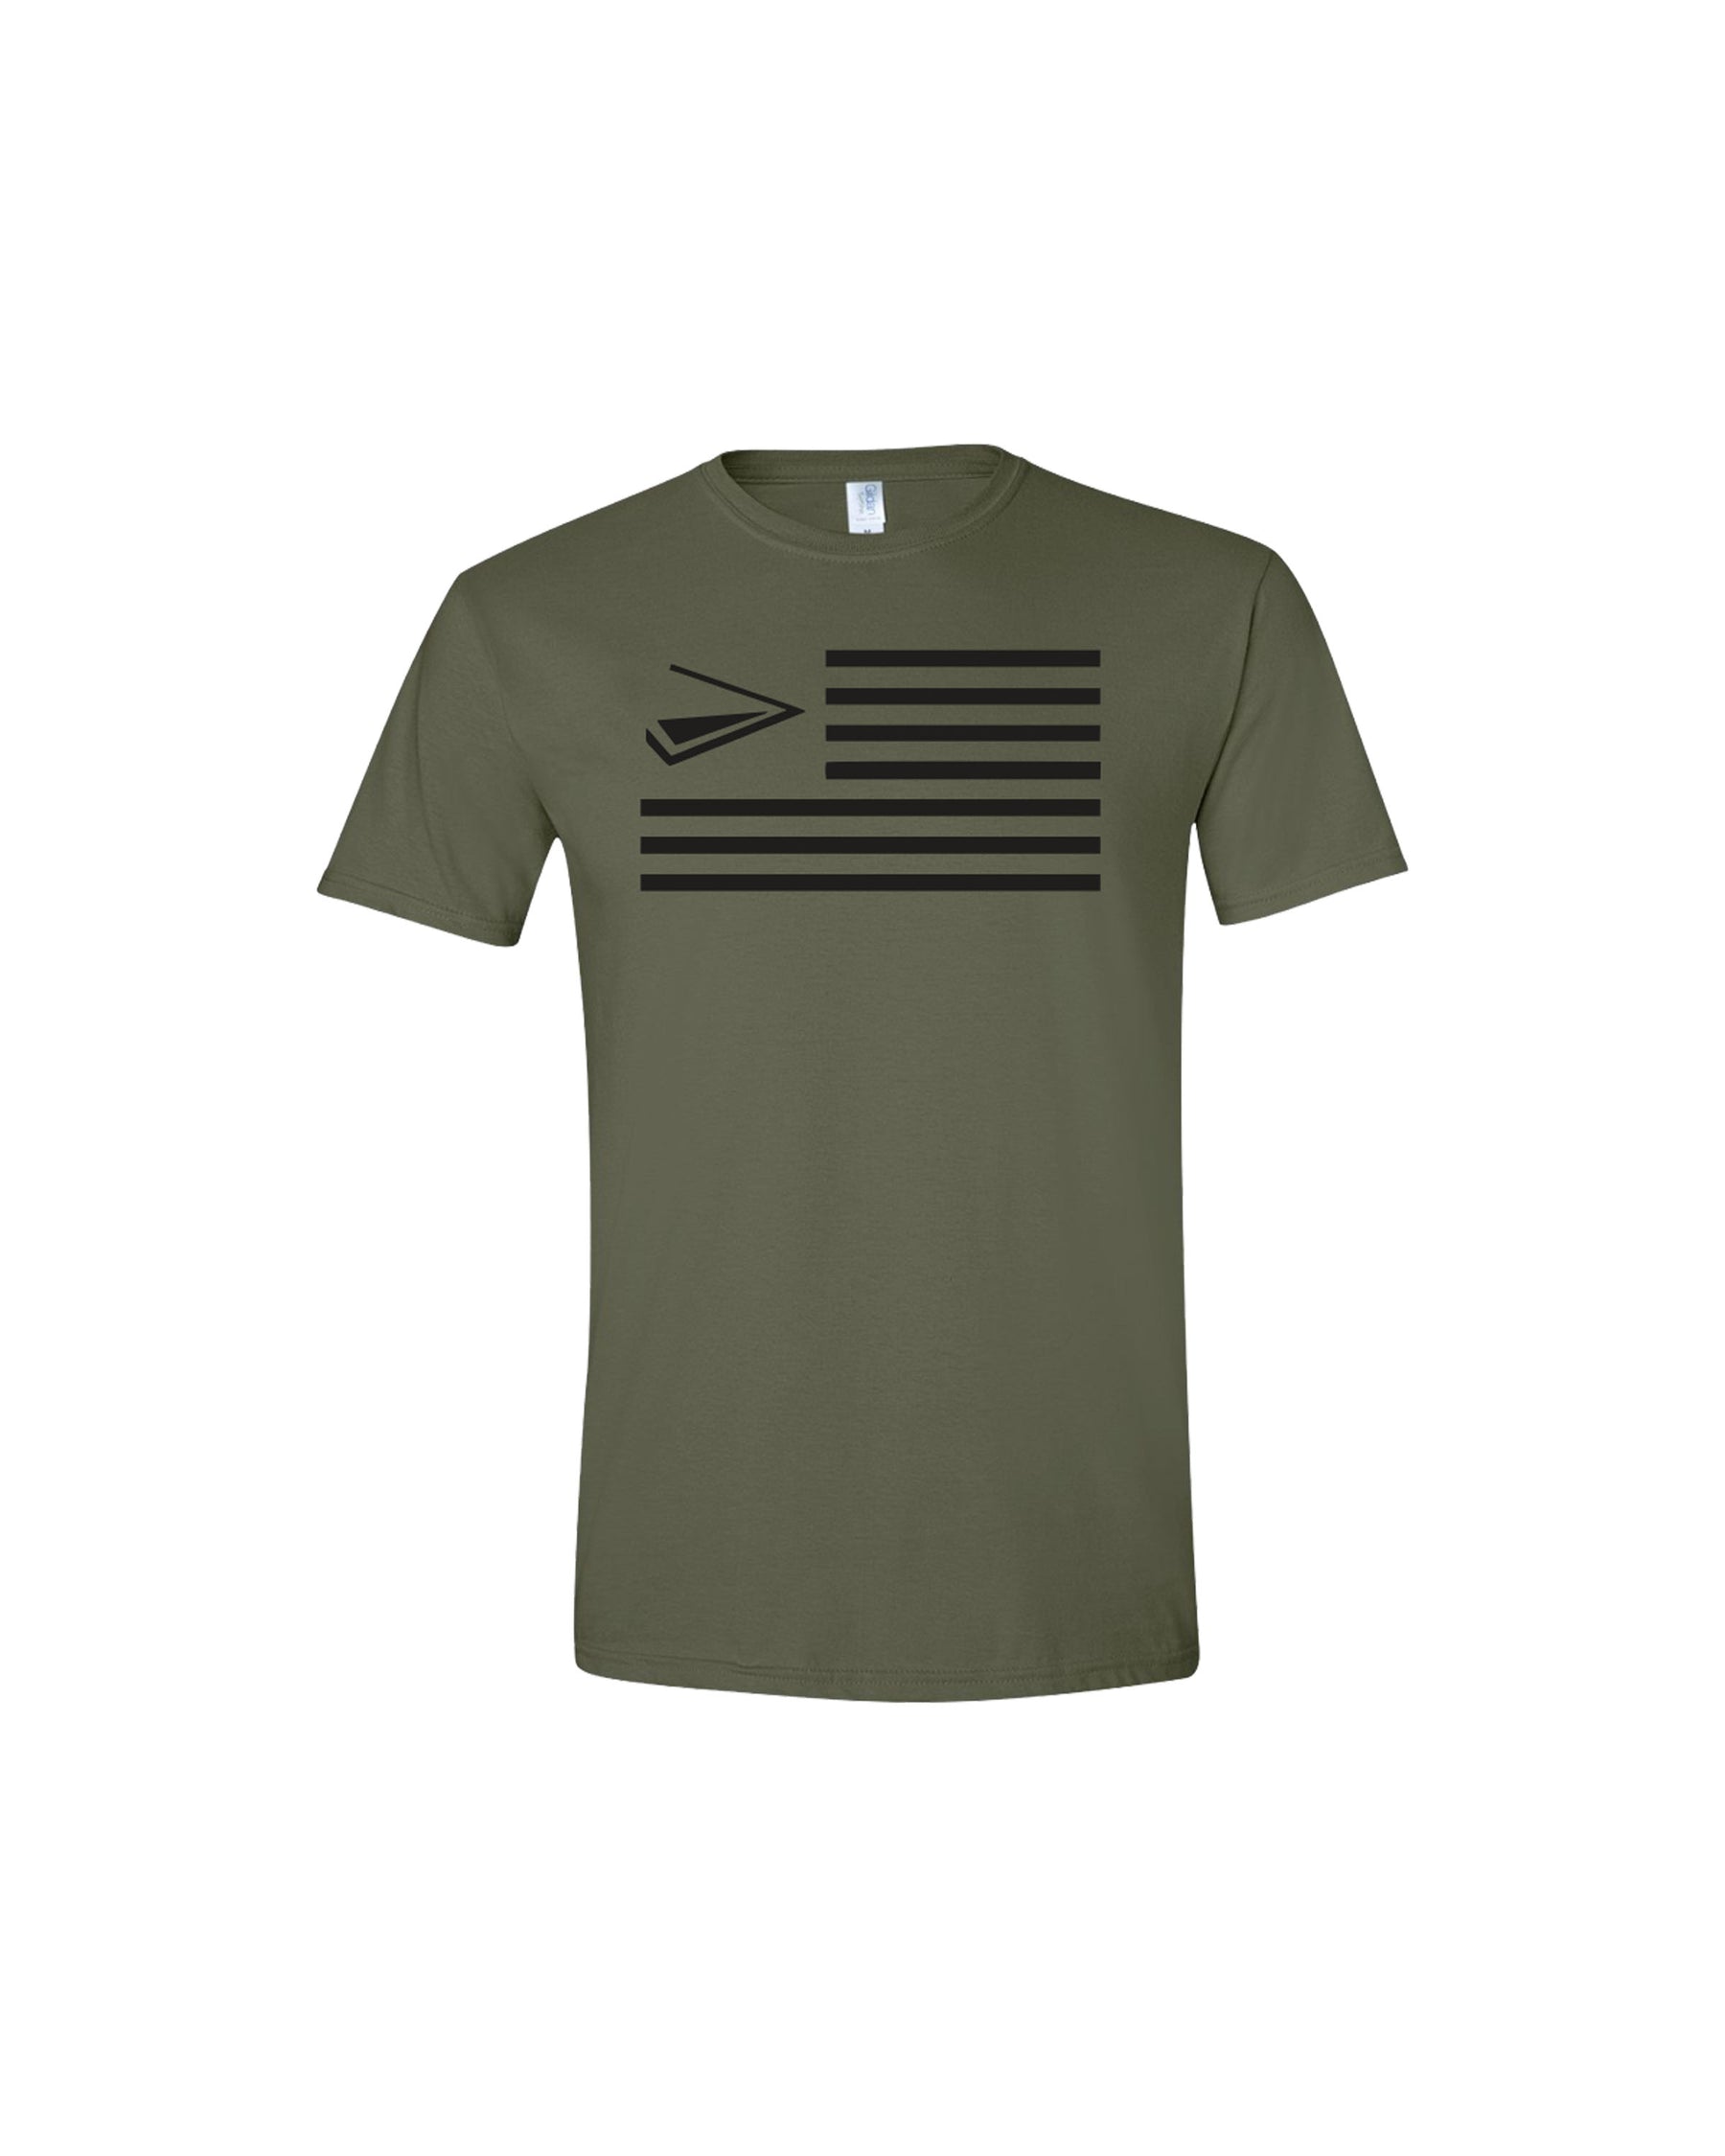 Olive Raised Hunting Flag T-Shirt